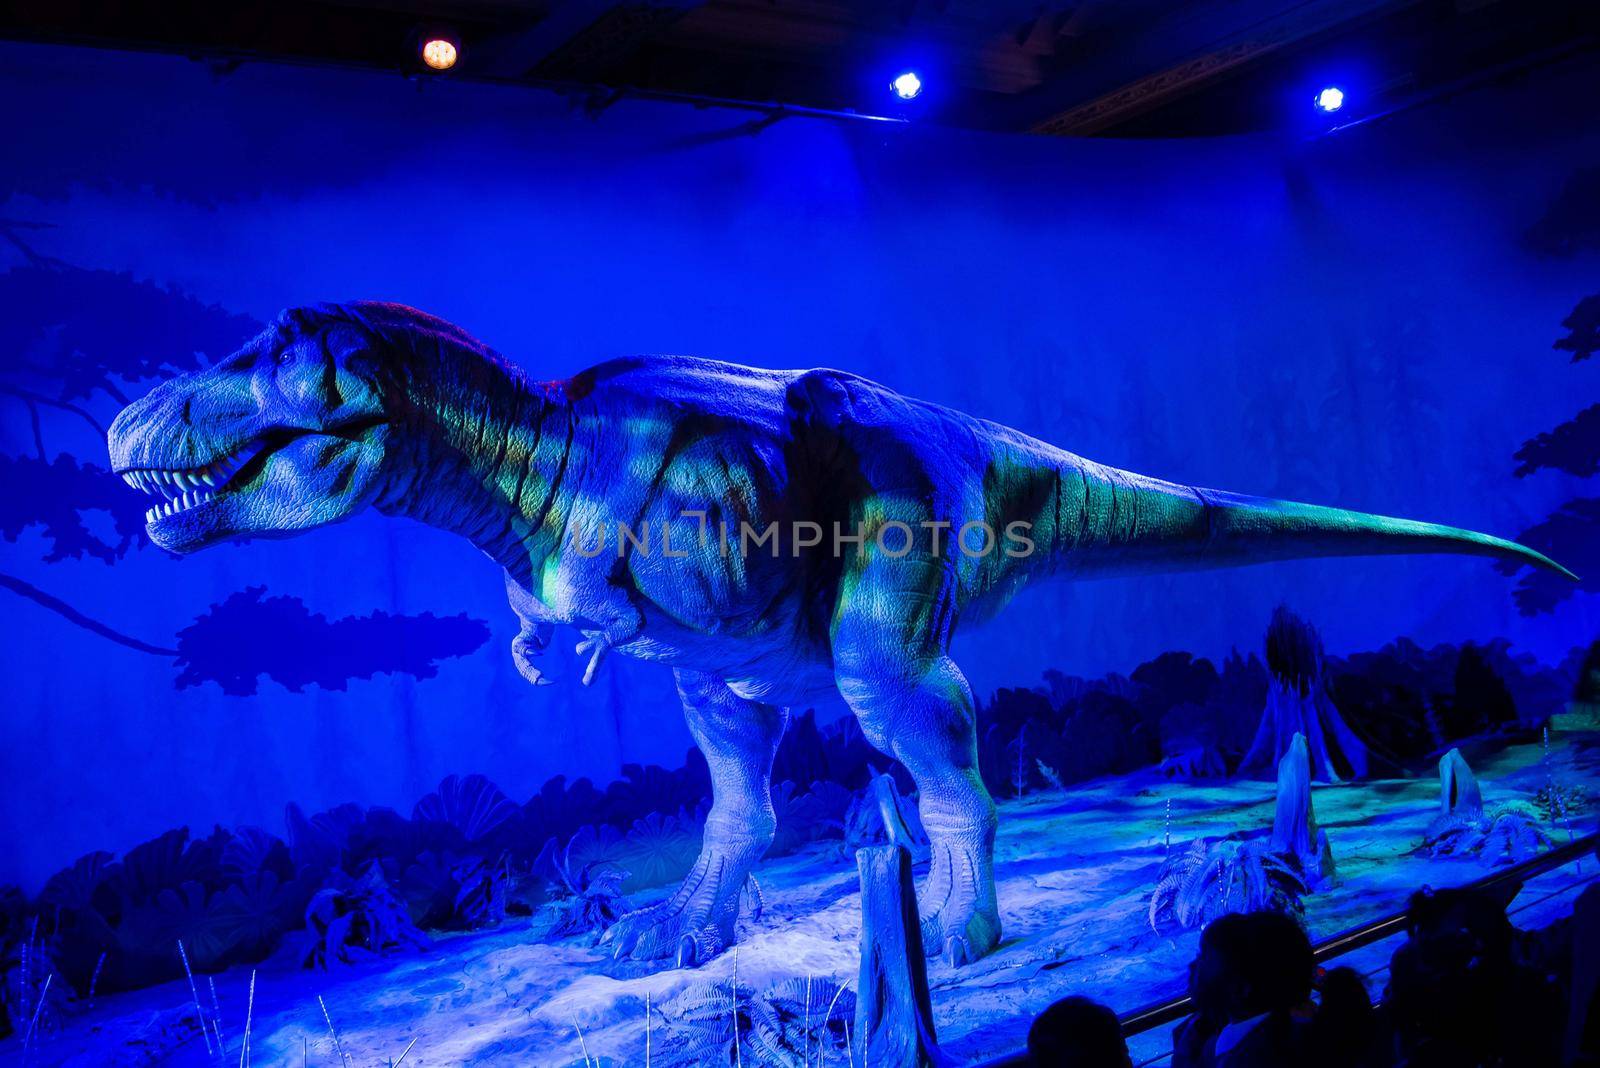 London, UK - January 27, 2017: The Tyrannosaurus Rex stands proud at the London Natural History Museum.